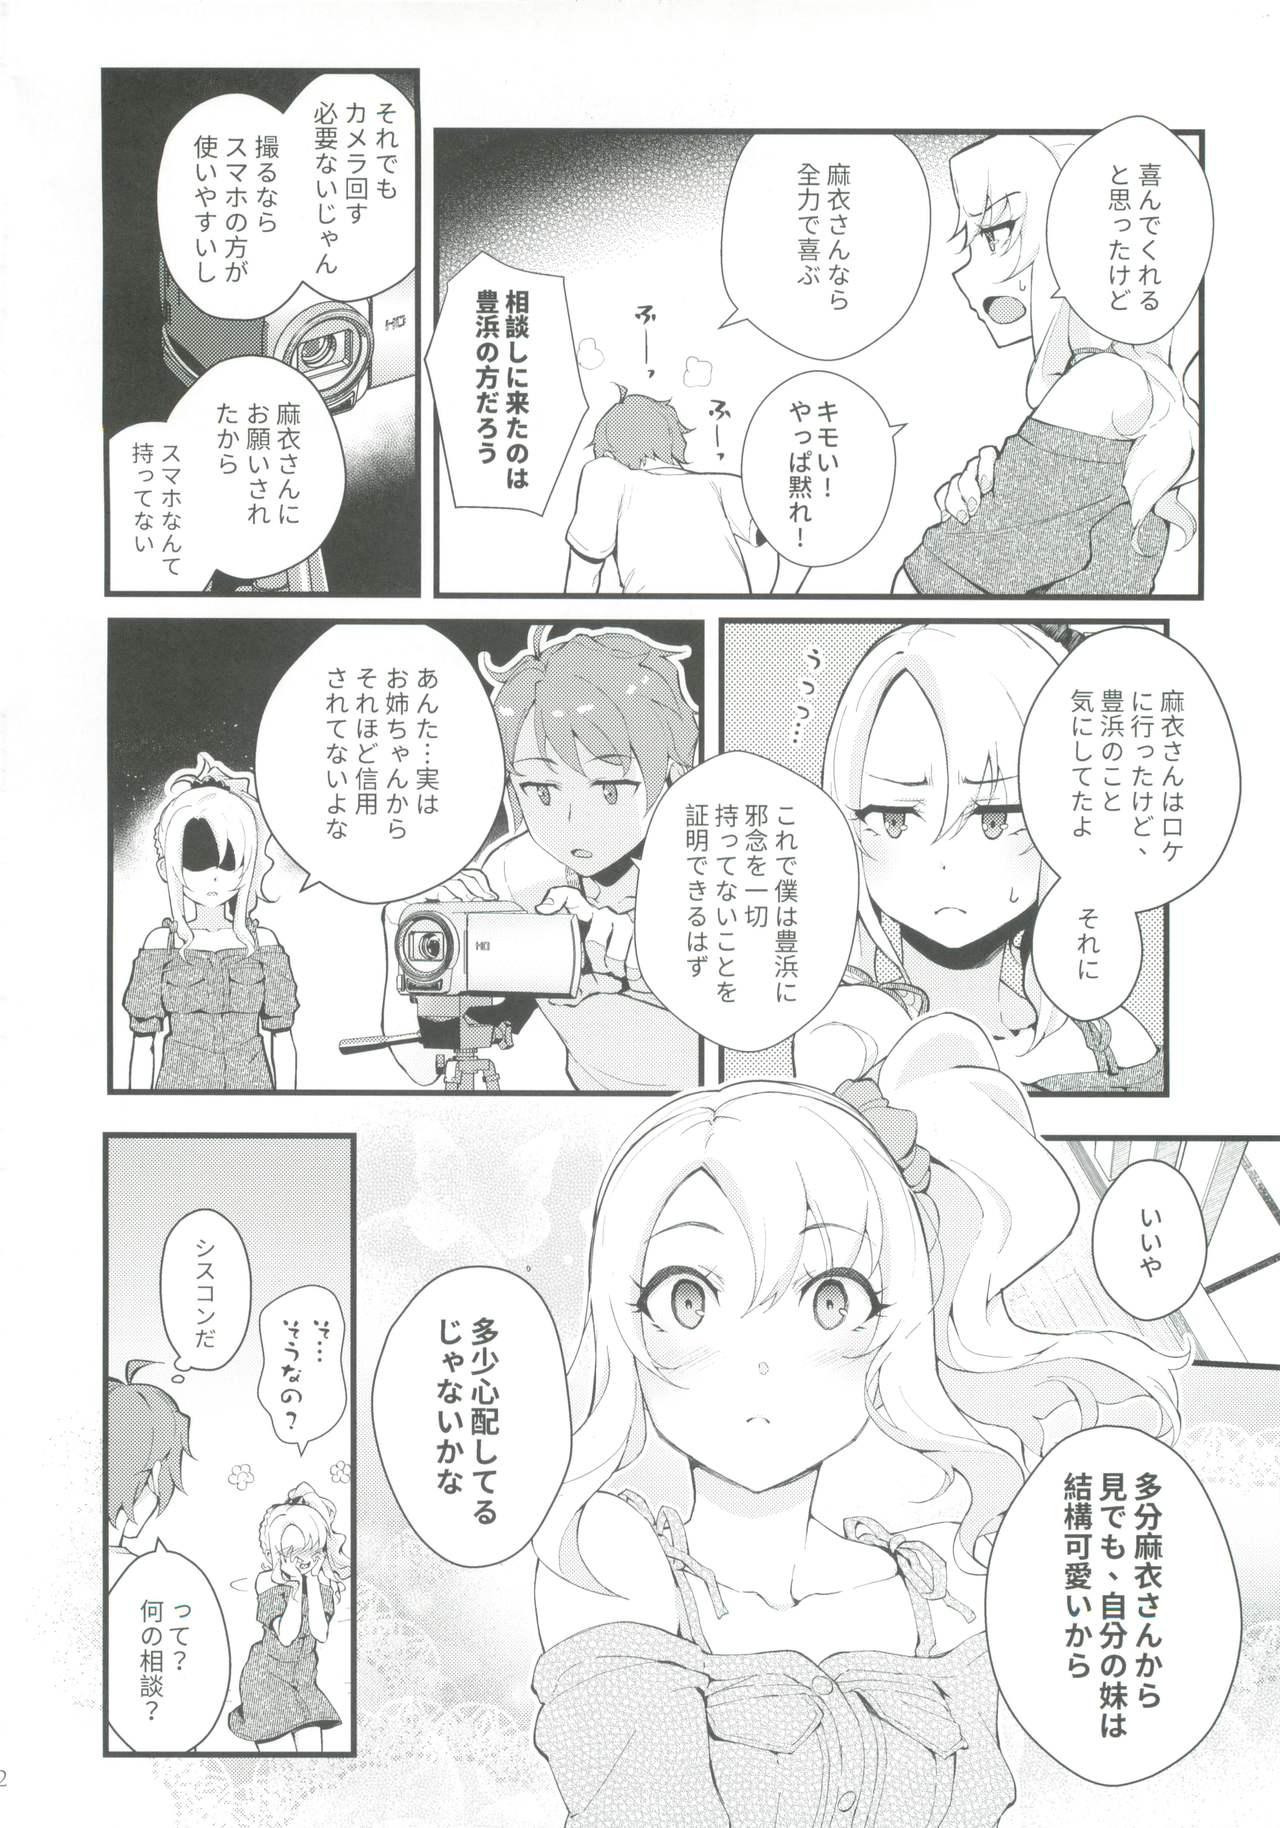 Leaked Sisters Panic - Seishun buta yarou wa bunny girl senpai no yume o minai Teasing - Page 3